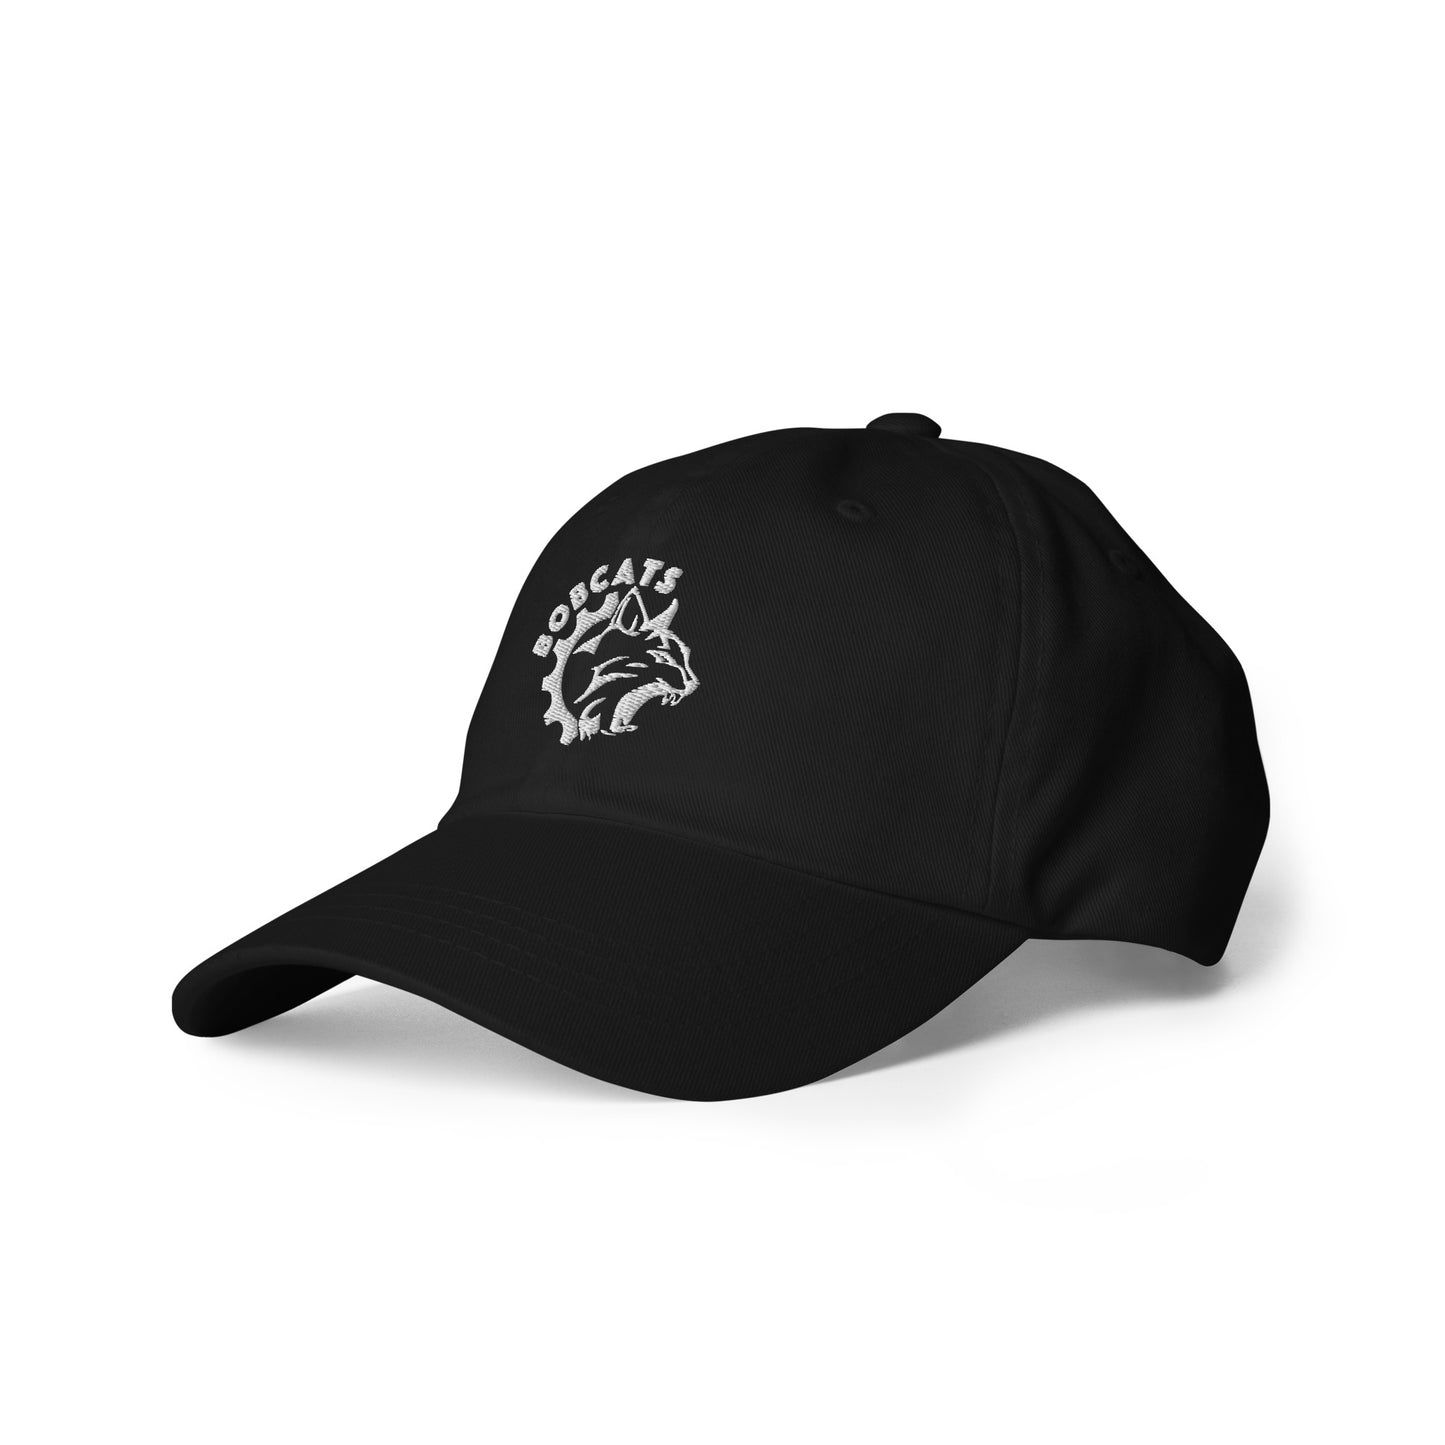 Bobcats Dad hat